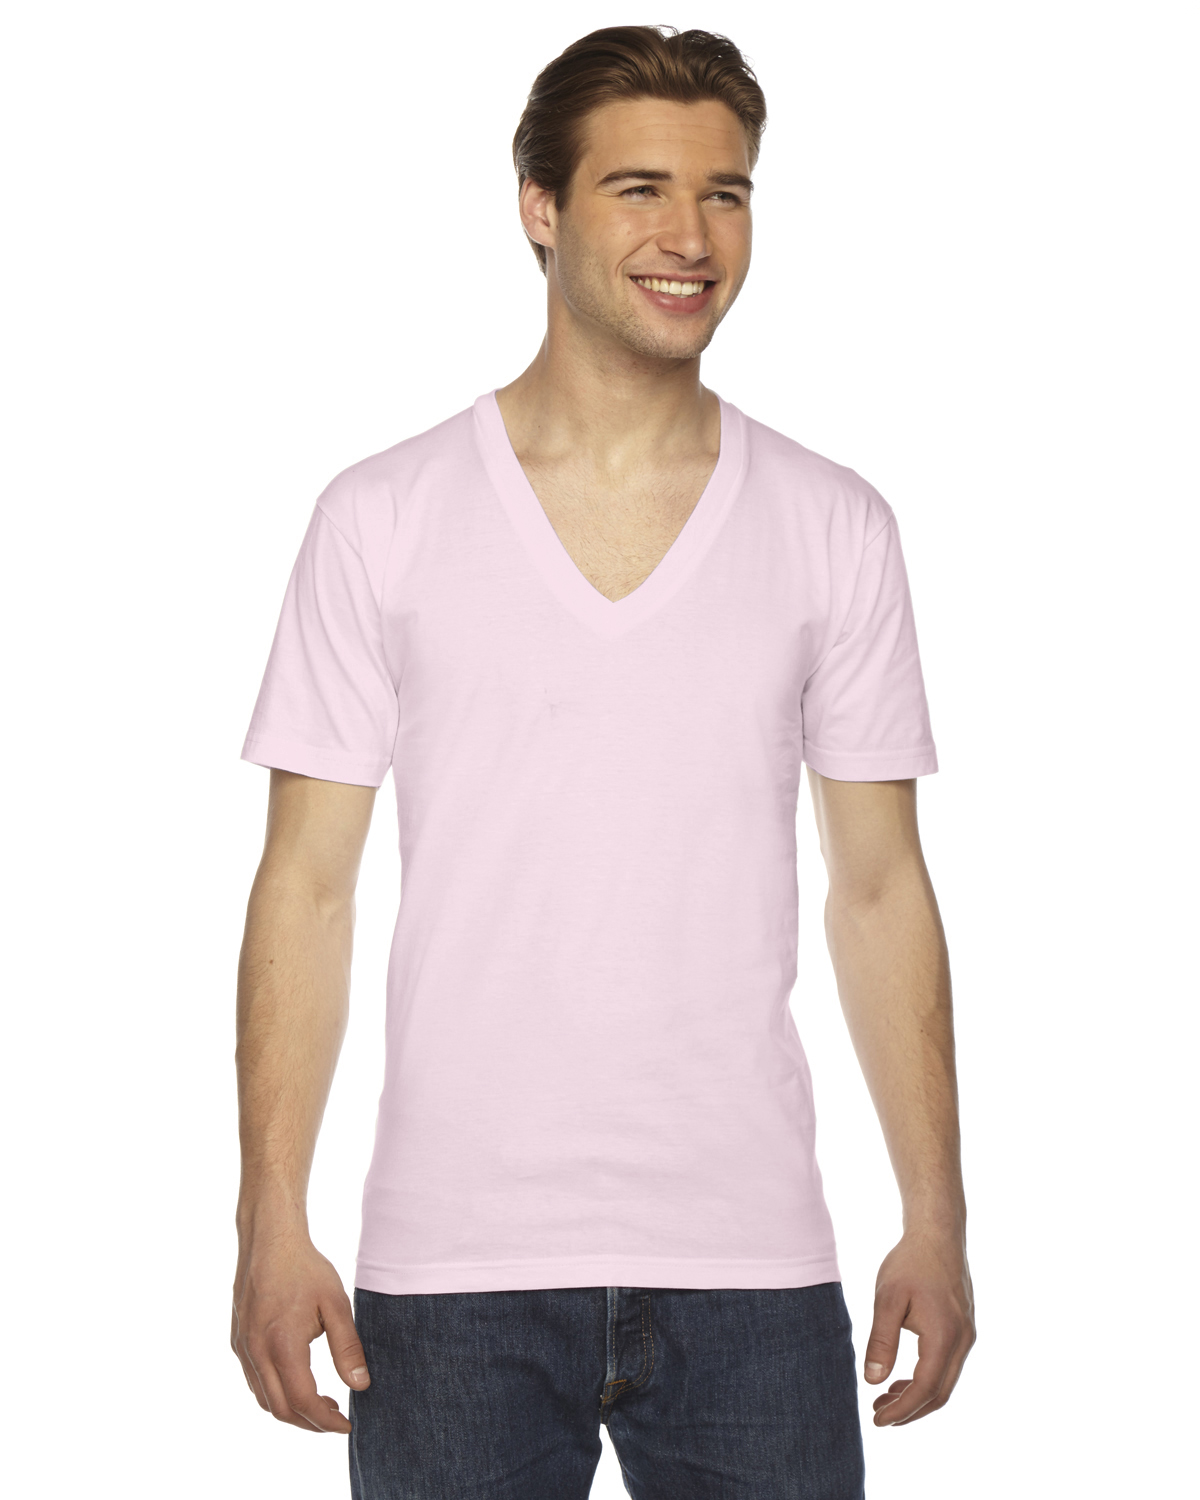 2456W American Apparel Unisex Fine Jersey Short-Sleeve V-Neck T-Shirt